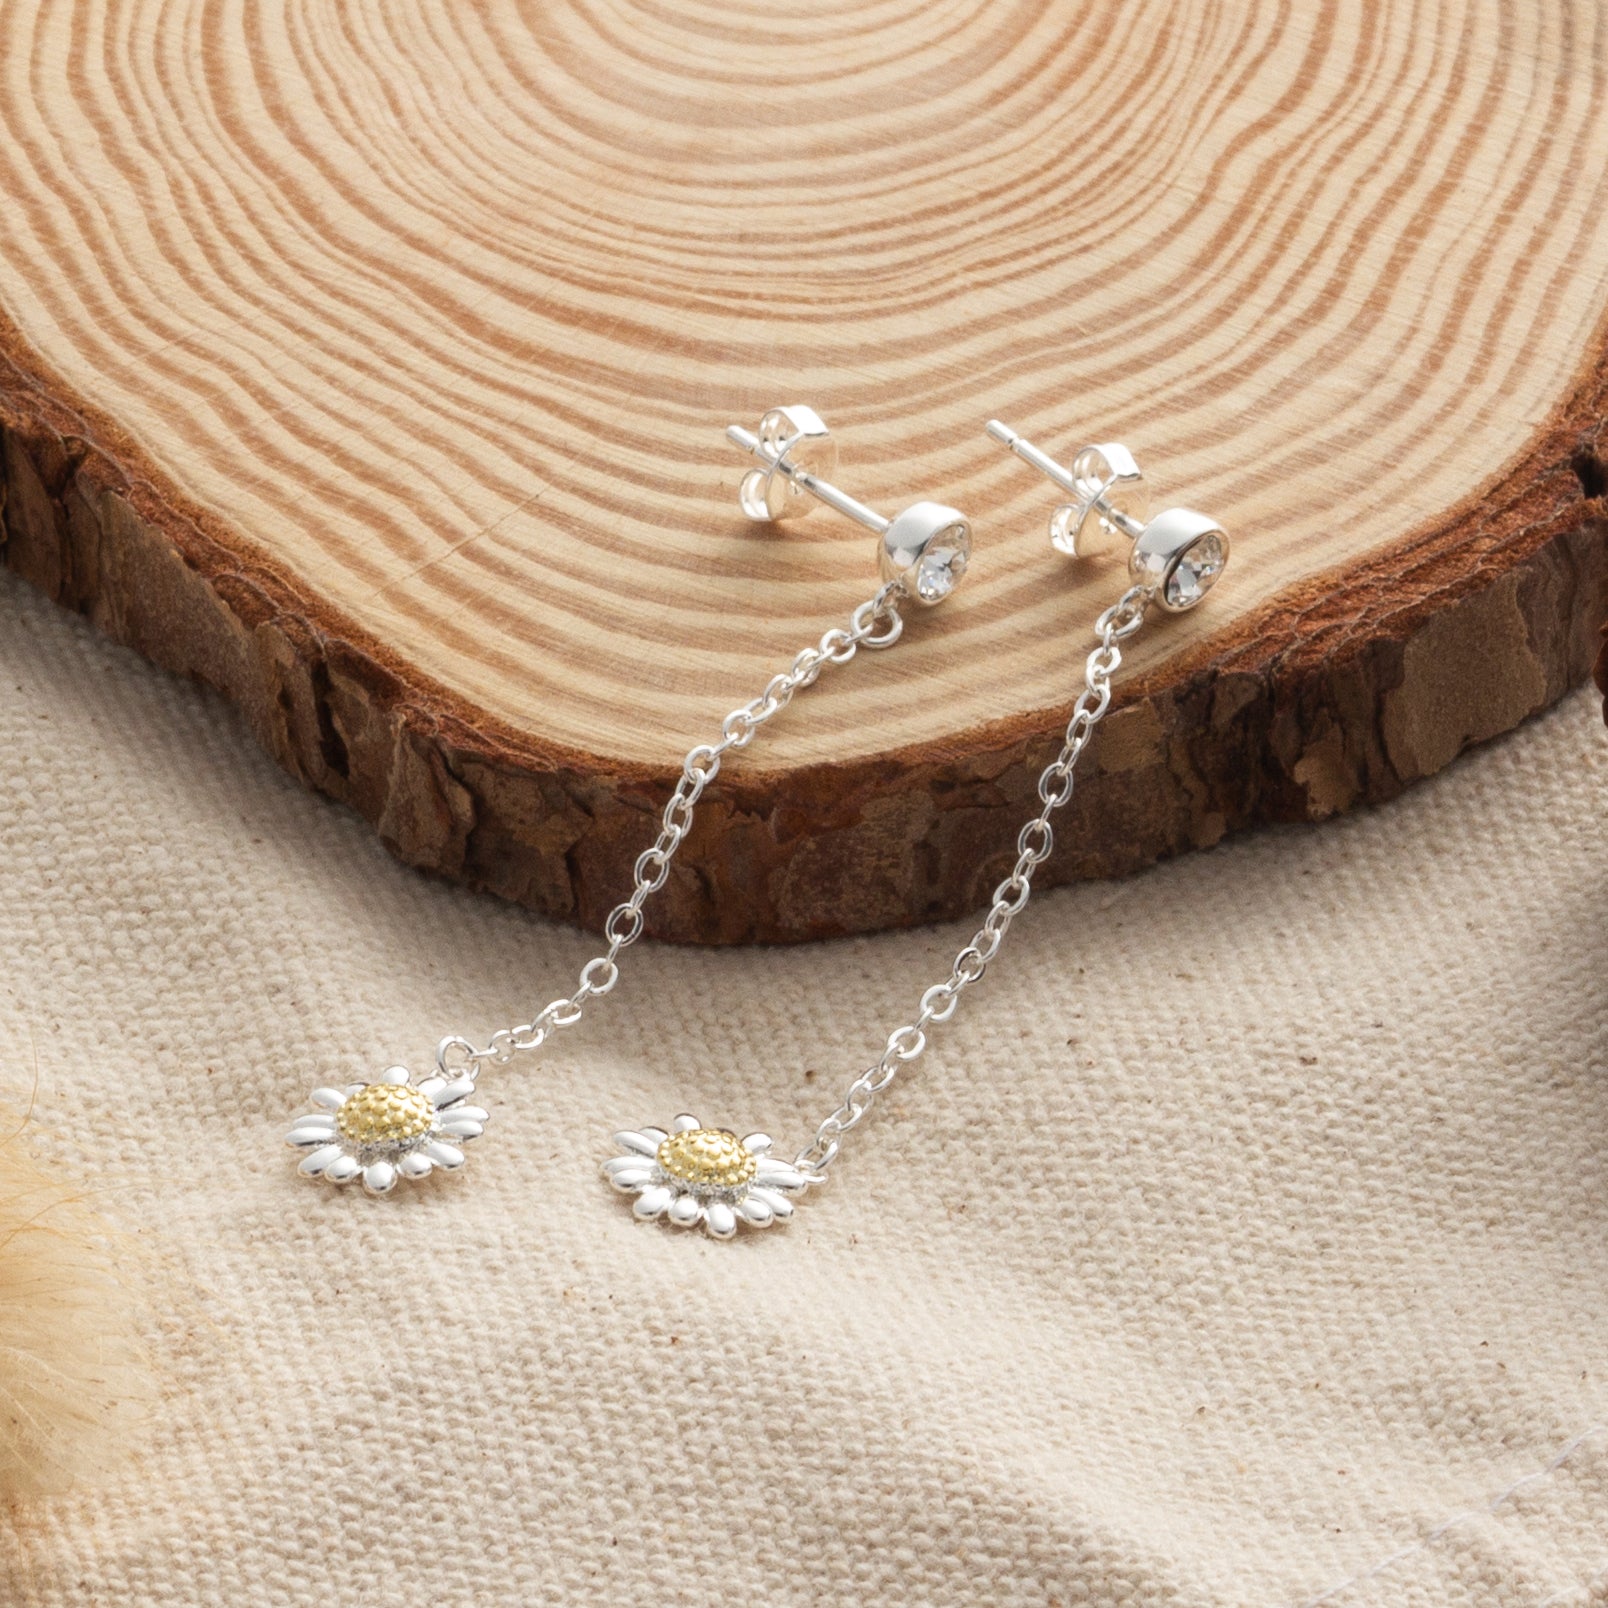 Daisy Drop Earrings Created with Zircondia® Crystals